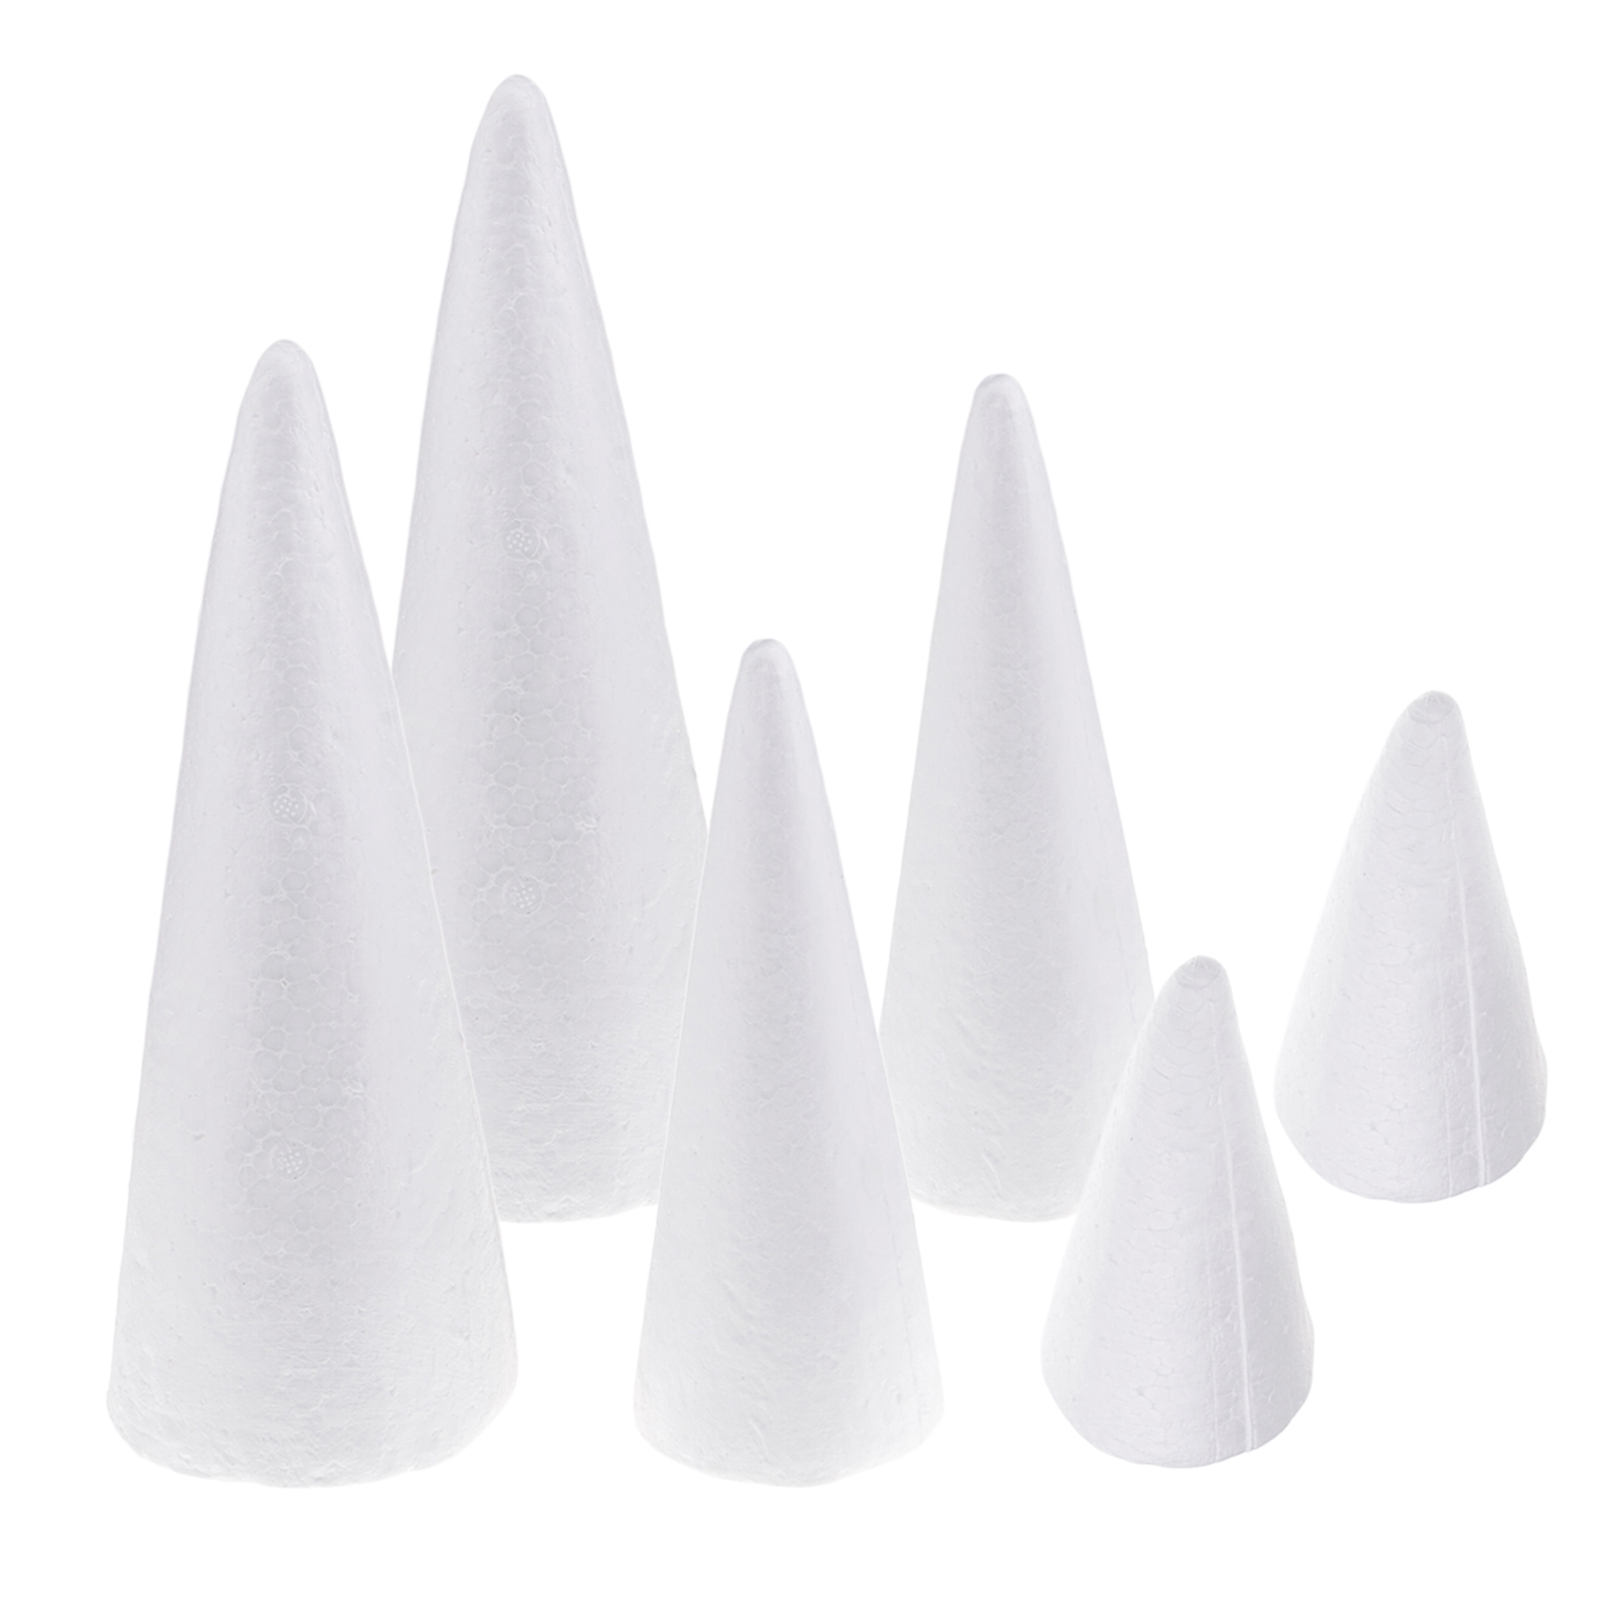 Amosfun 6pcs 24cm Solid Foam Cone Diy Craft White Cone Handmade Cone Accessories for Children Christmas Party 